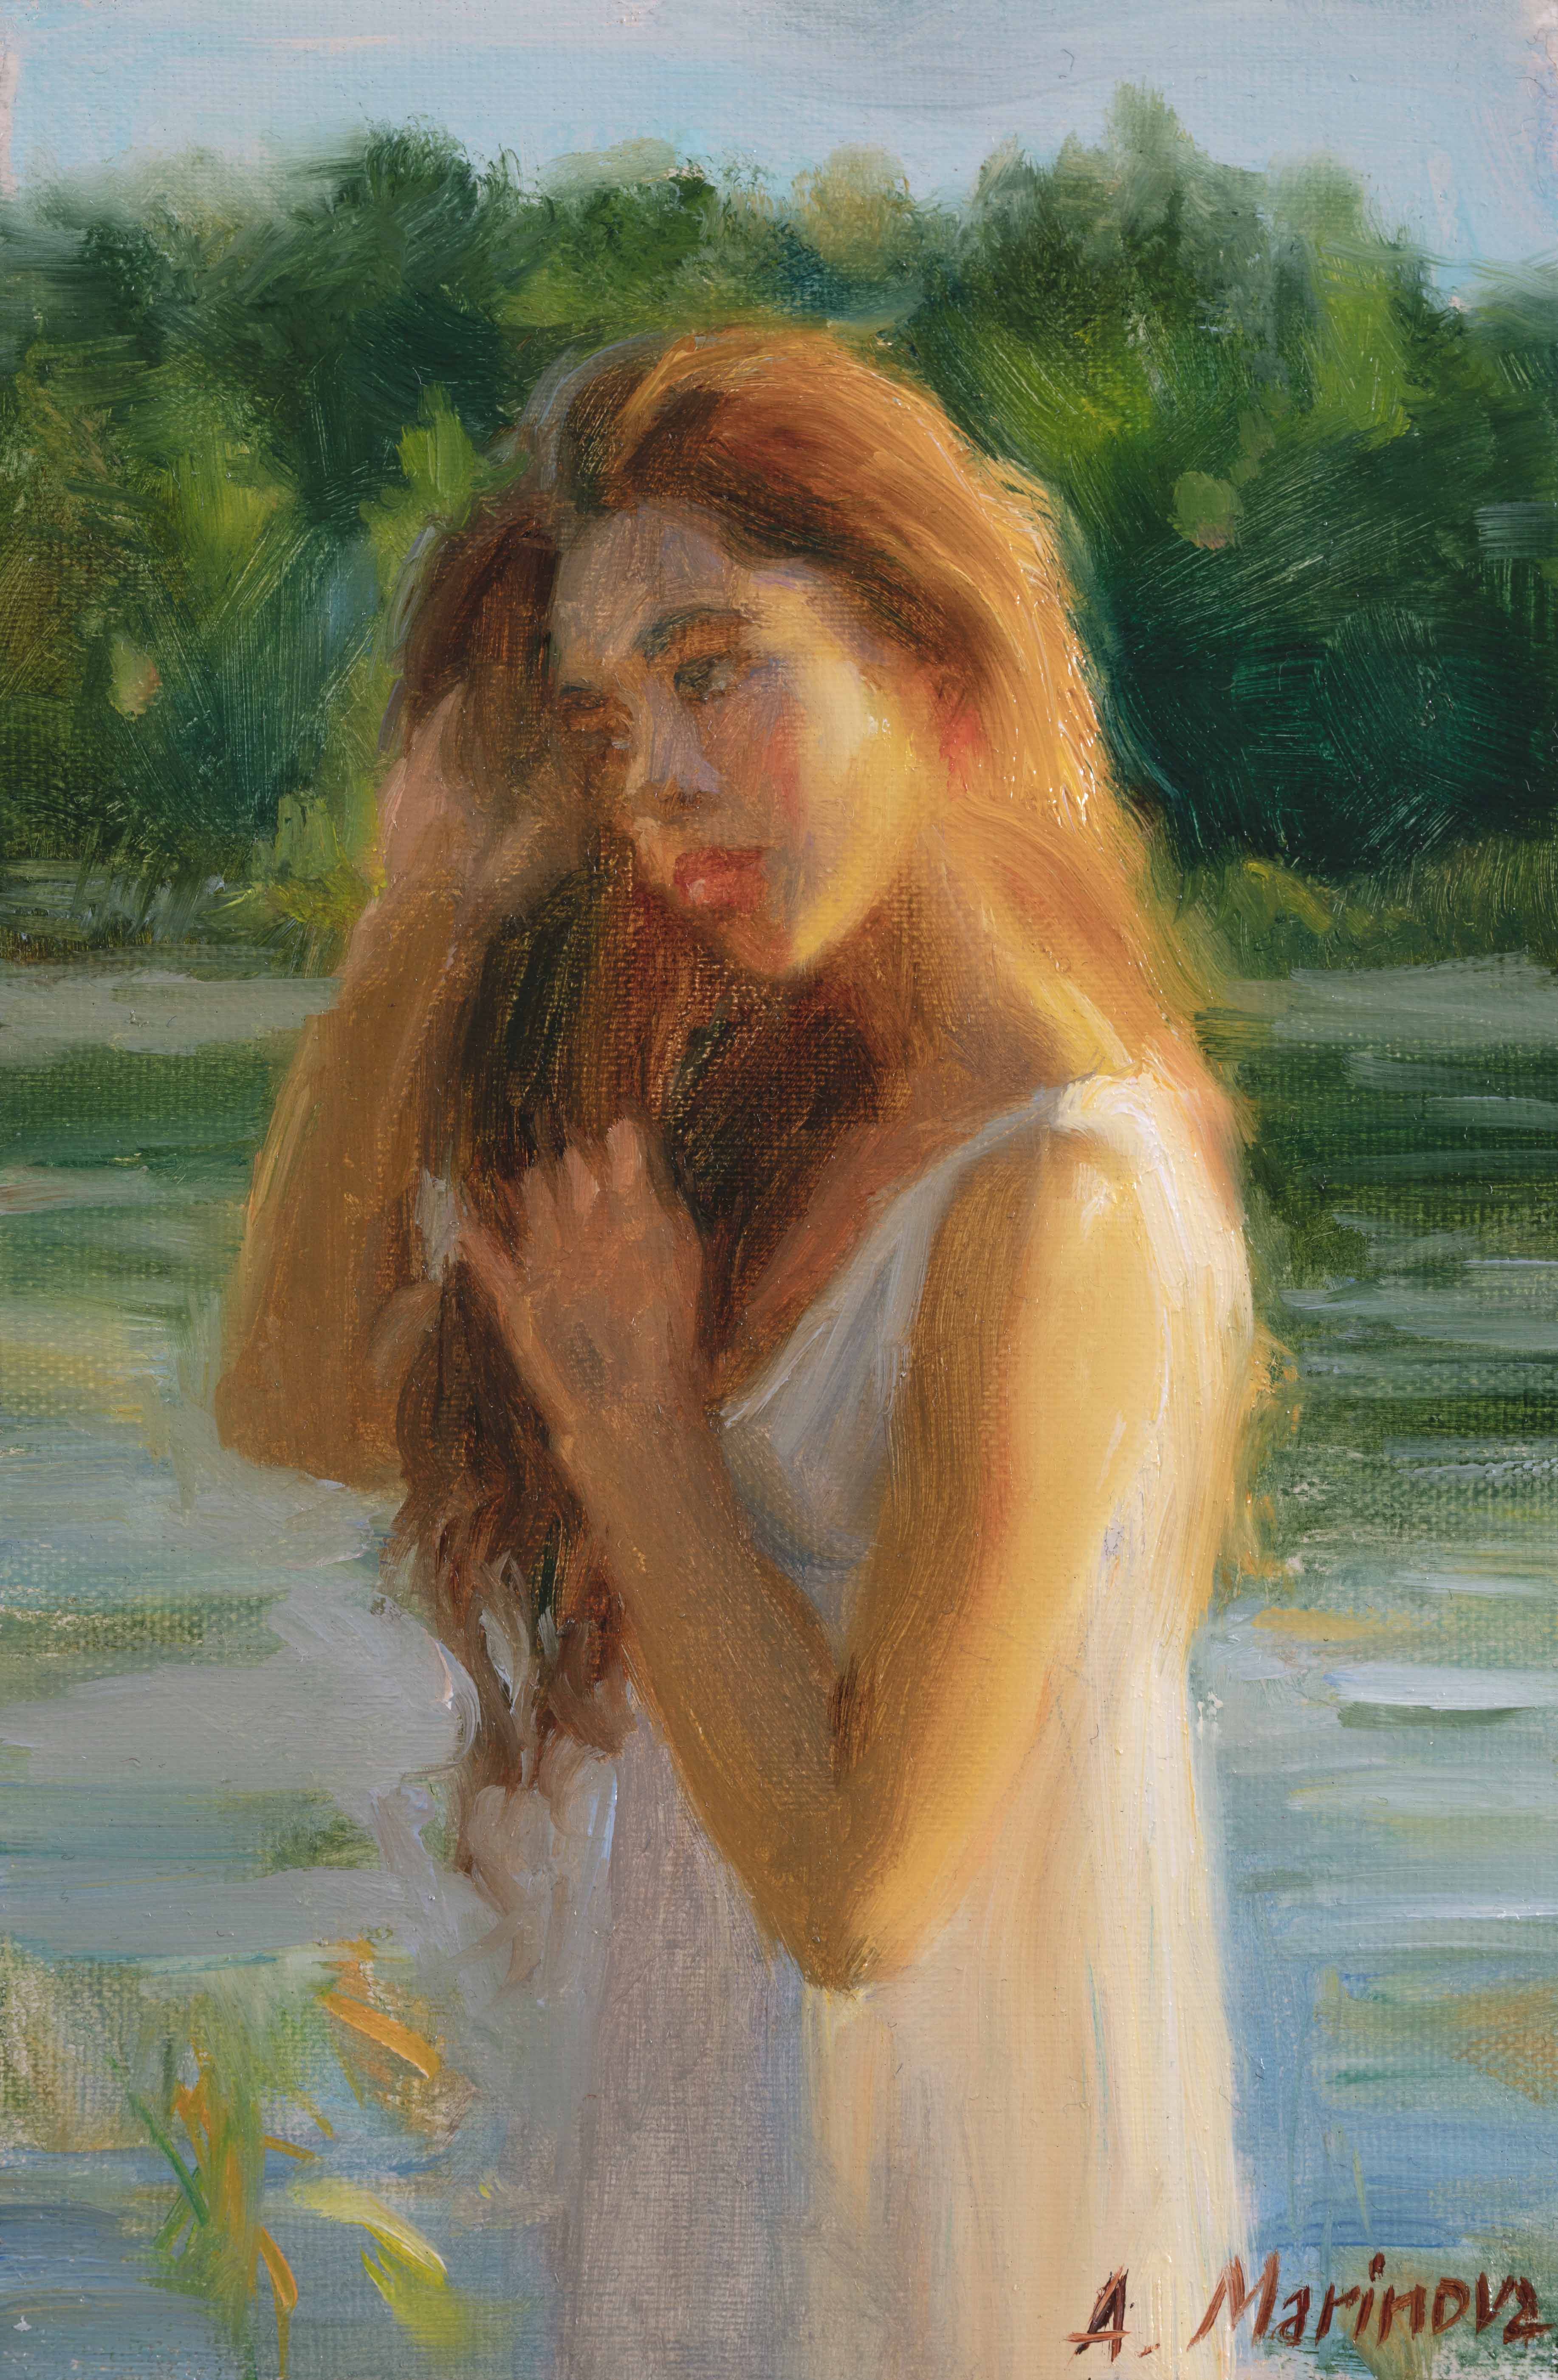 The Little Study - 1, Anna Marinova, Buy the painting Oil